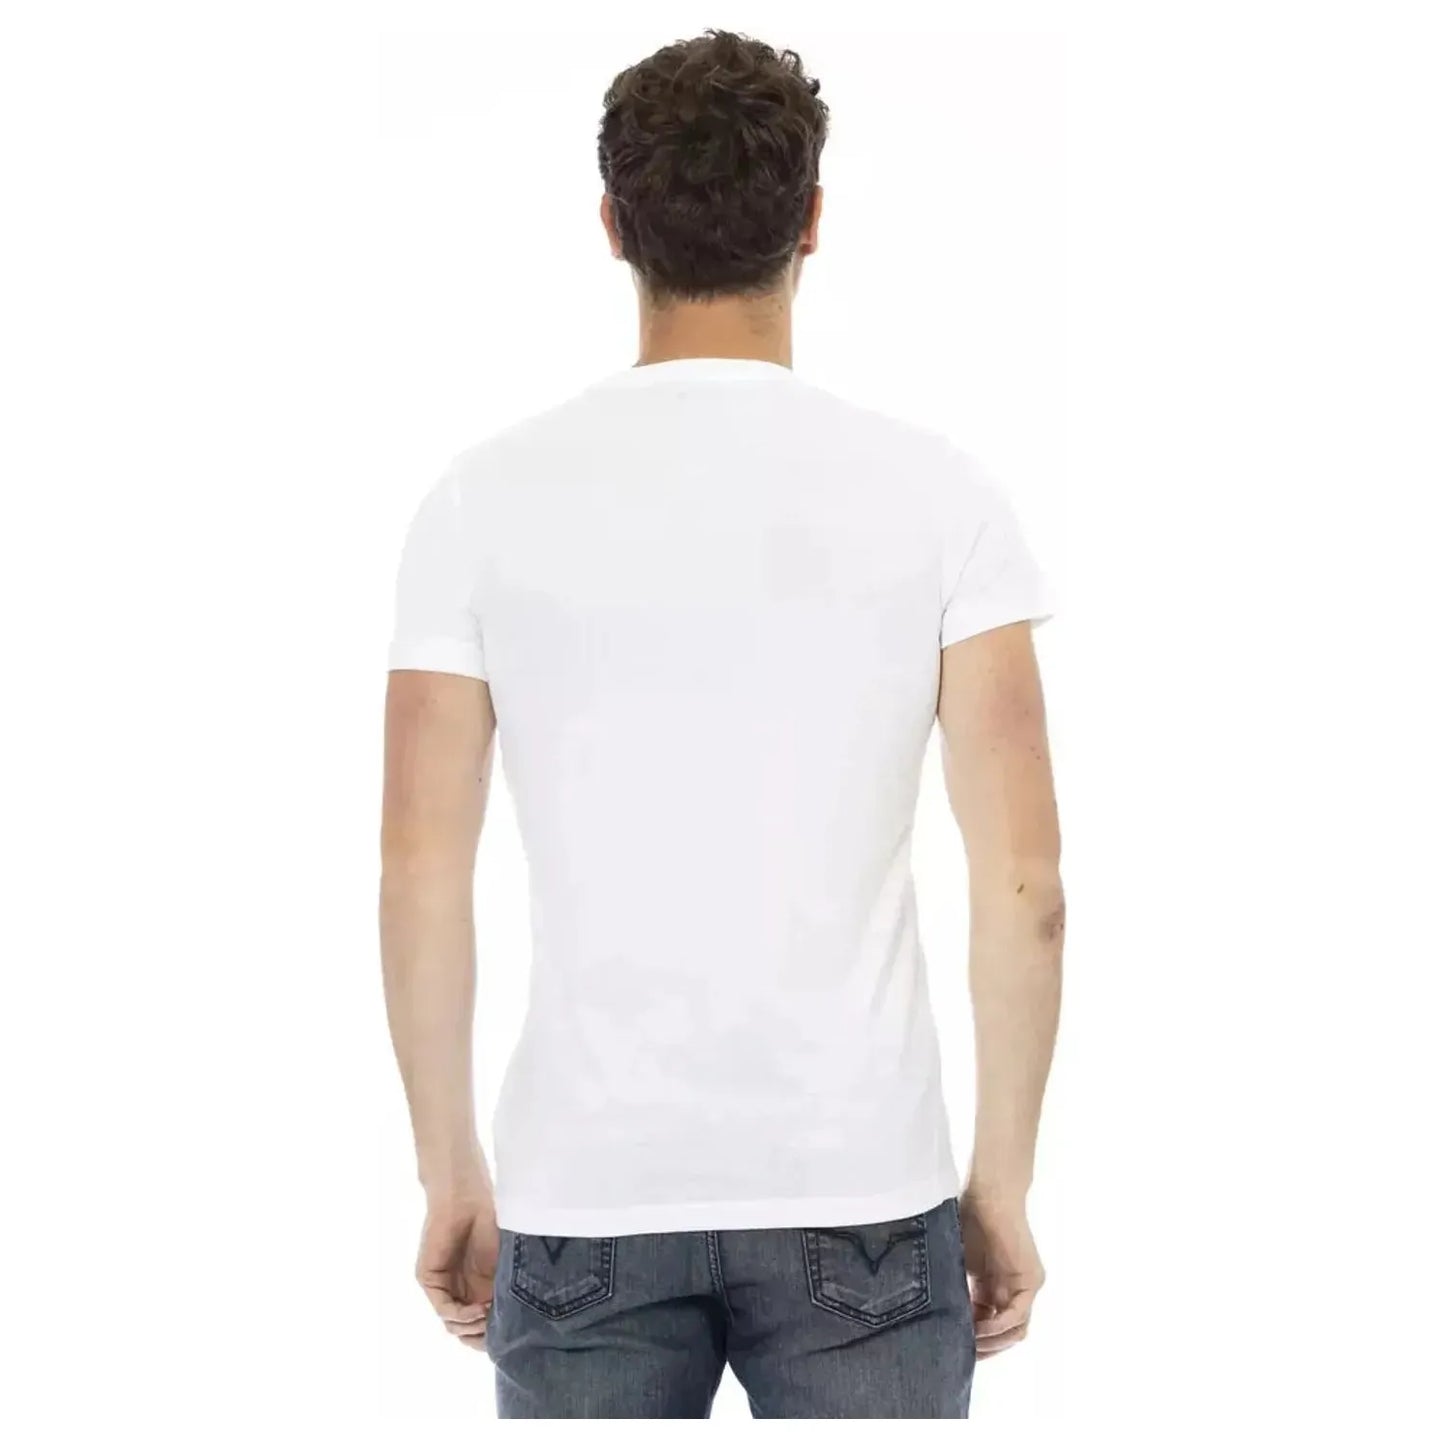 Trussardi Action Sleek White Printed Tee with Superior Comfort white-cotton-t-shirt-127